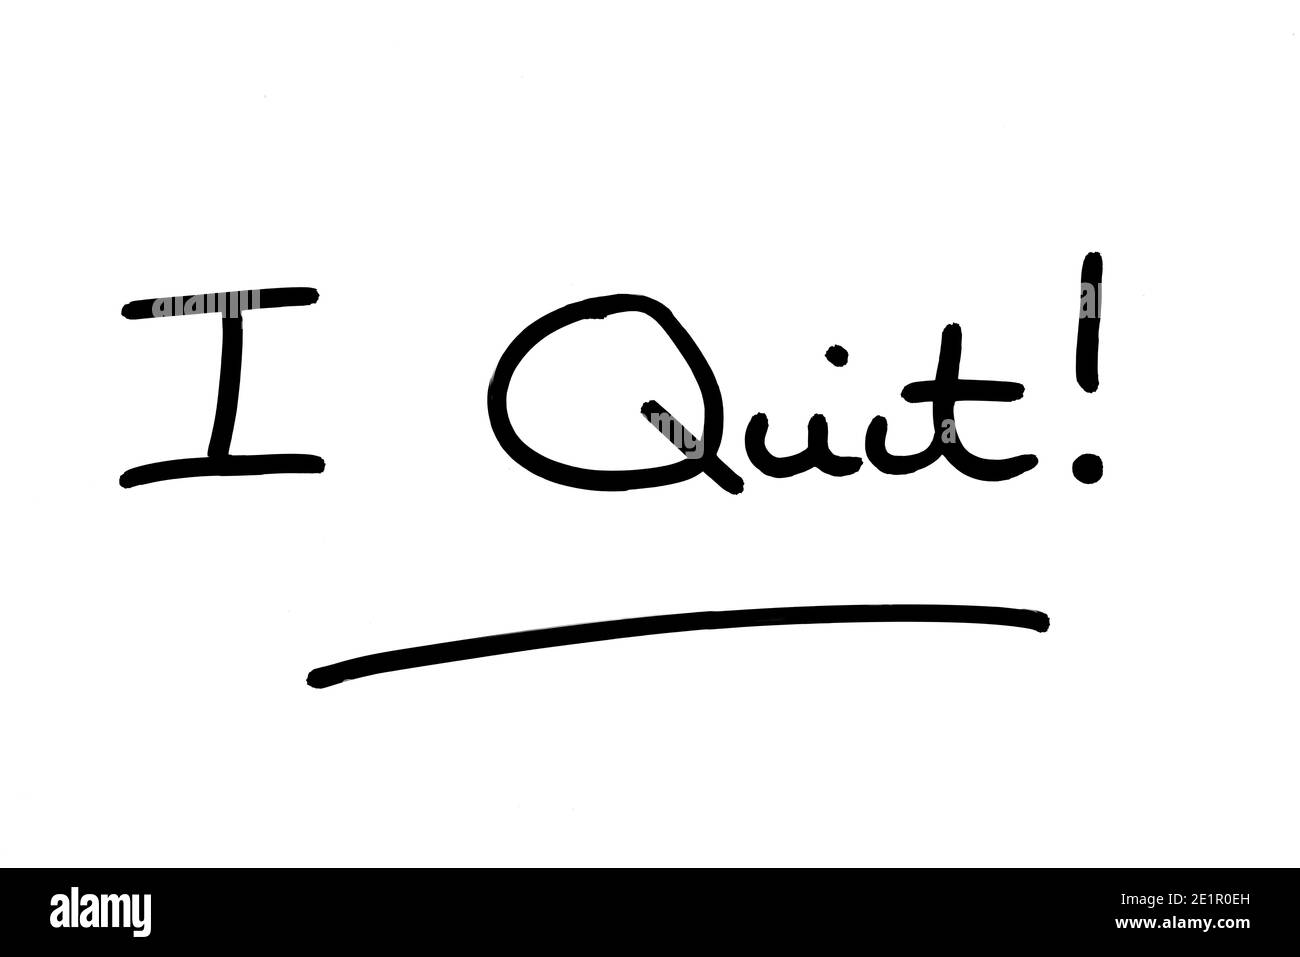 I Quit! handwritten on a white background. Stock Photo